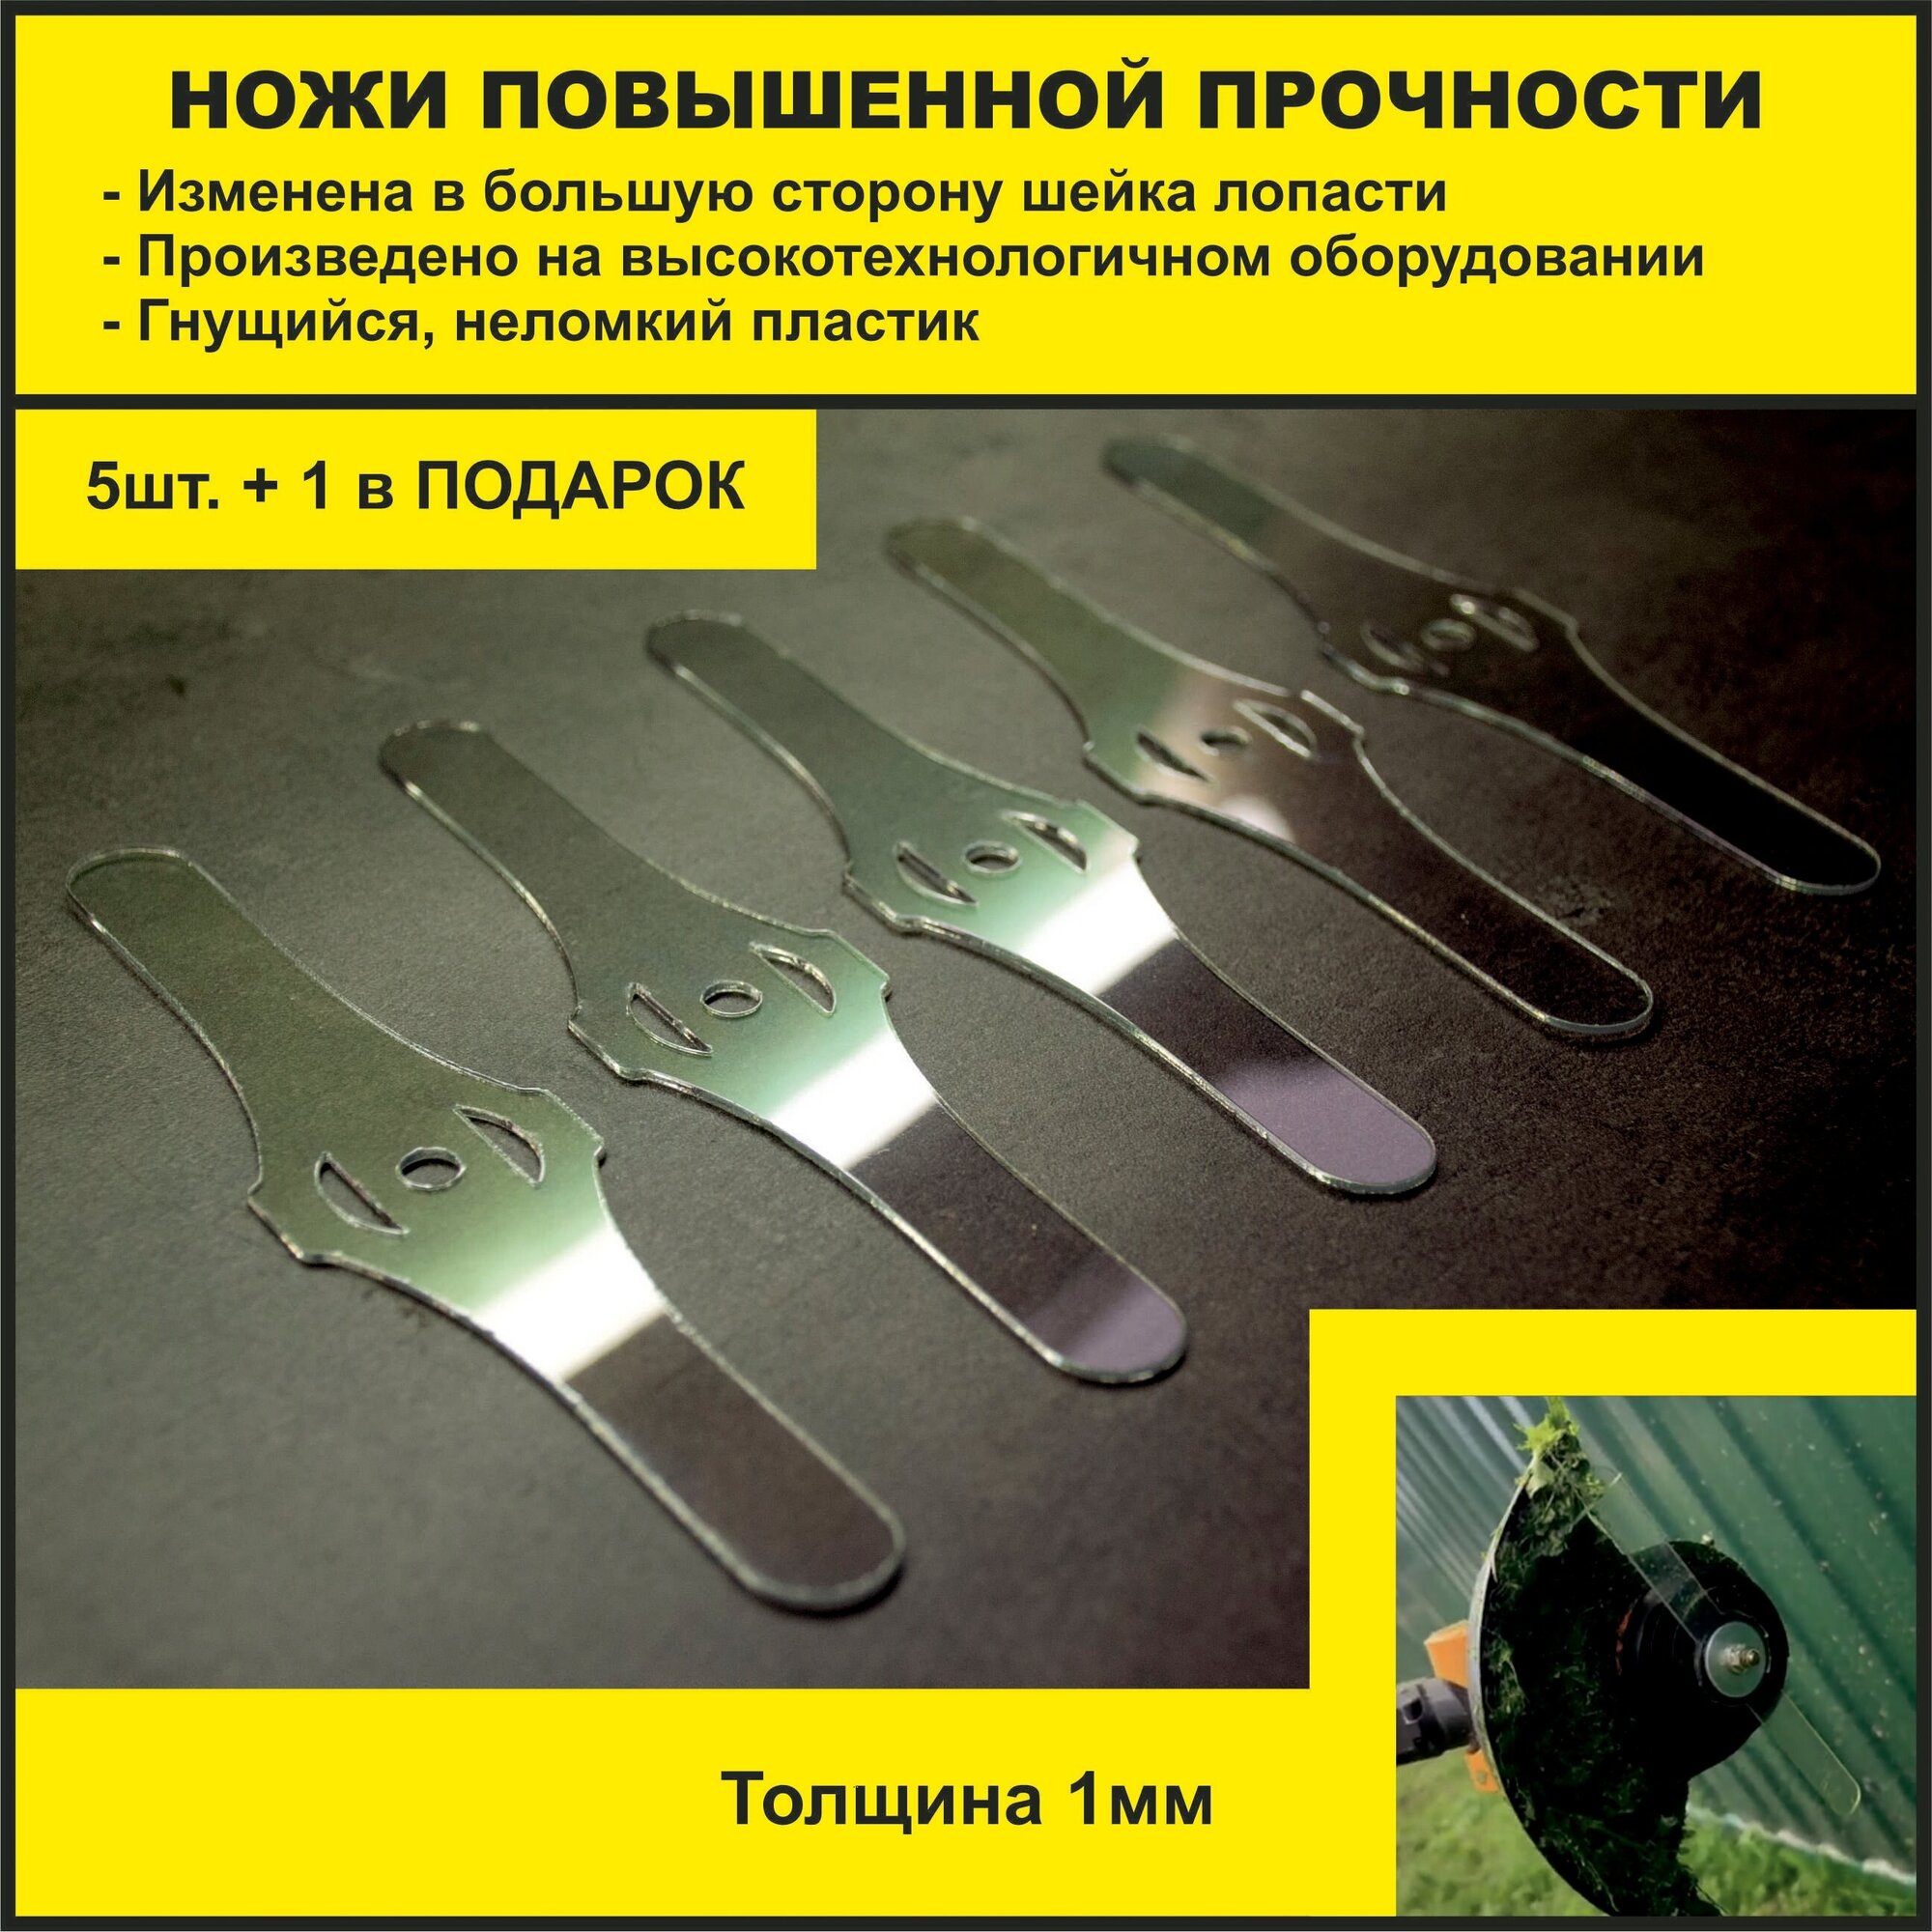 Ножи повышенной прочности для аккумуляторного триммера DEKO DKTR12 DKTR21 ZITREK GreenCut 12 GreenCut 20 Krotof CBC02 толщина 1мм